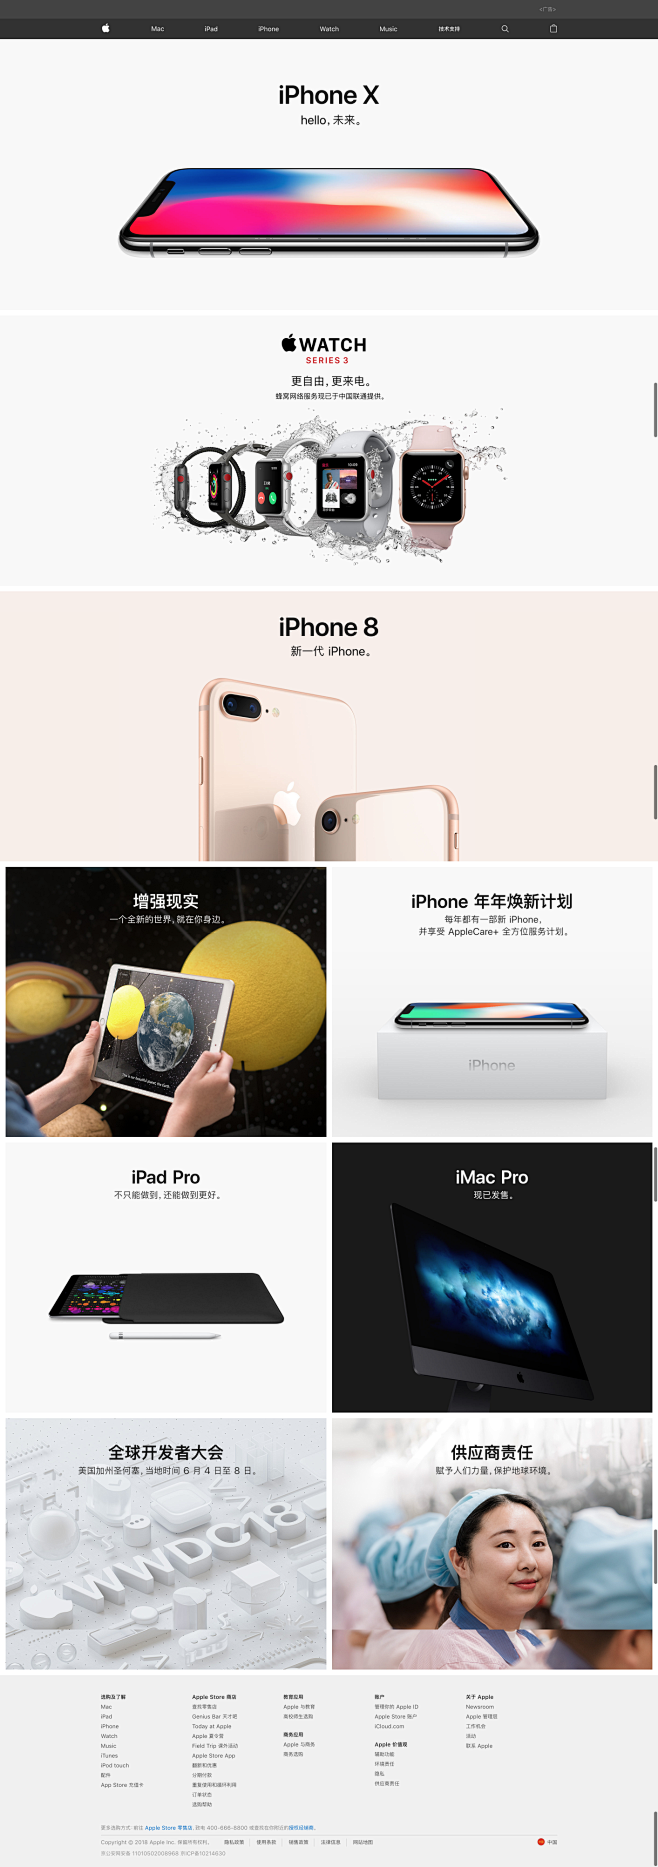 Apple (中国) - 官方网站